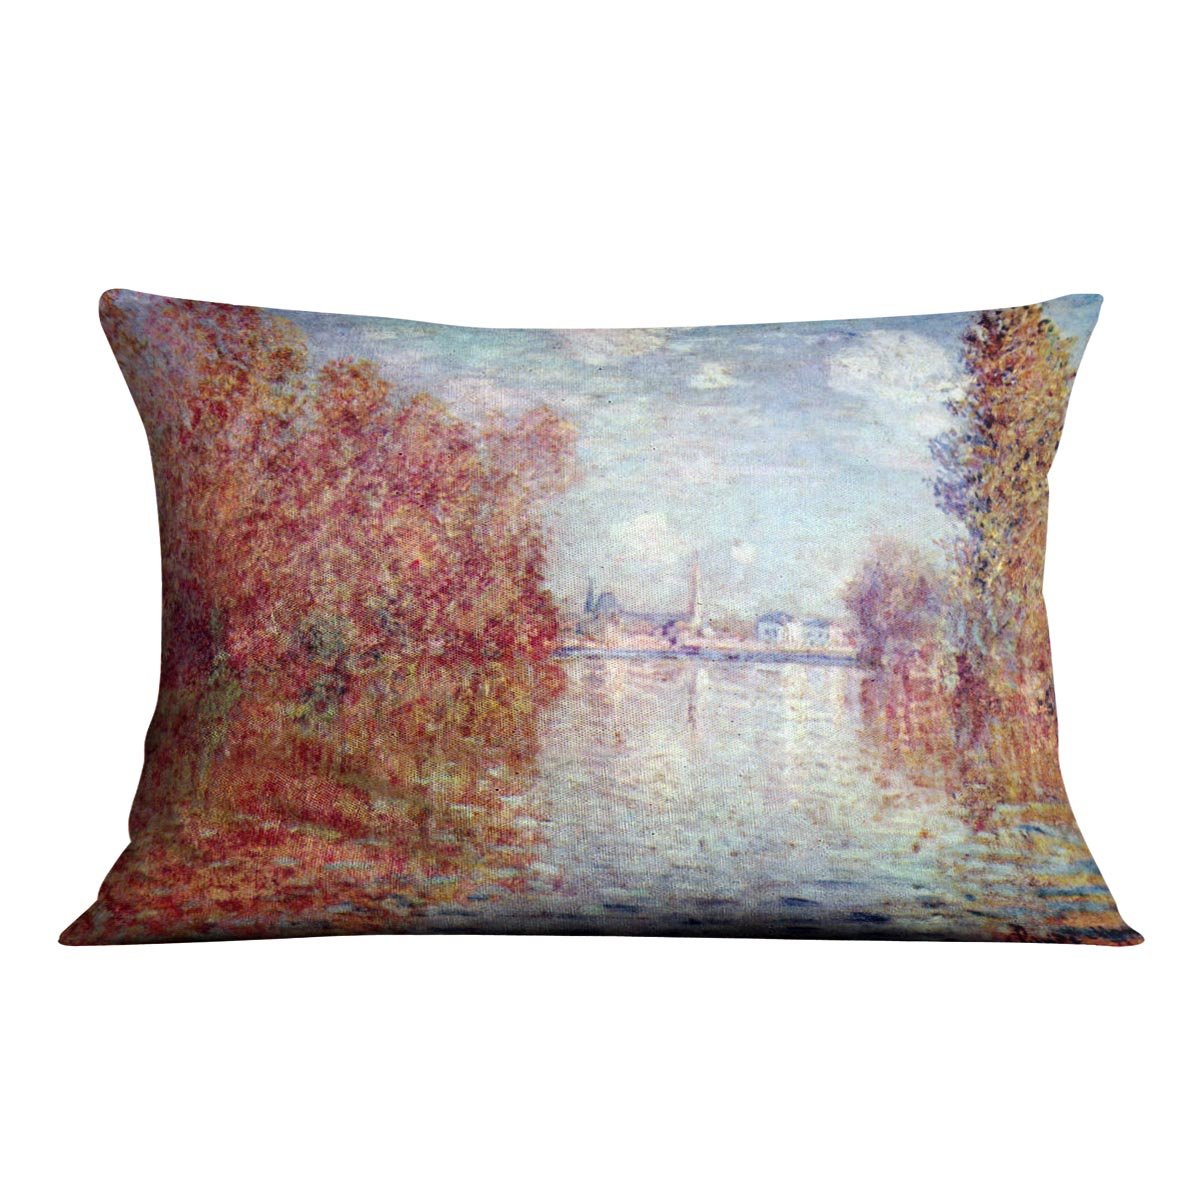 Autumn in Argenteuil by Monet Throw Pillow